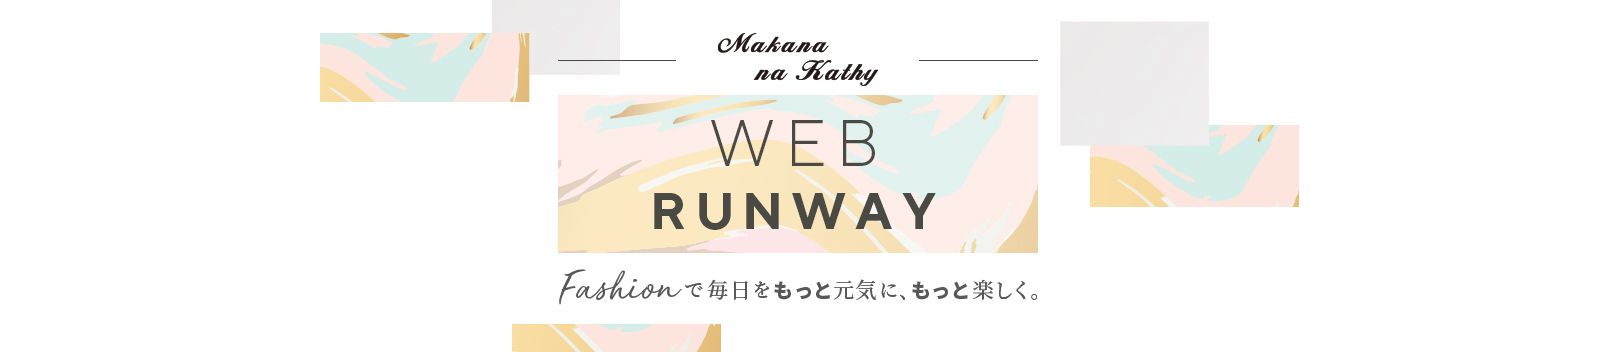 WEB RUNWAY